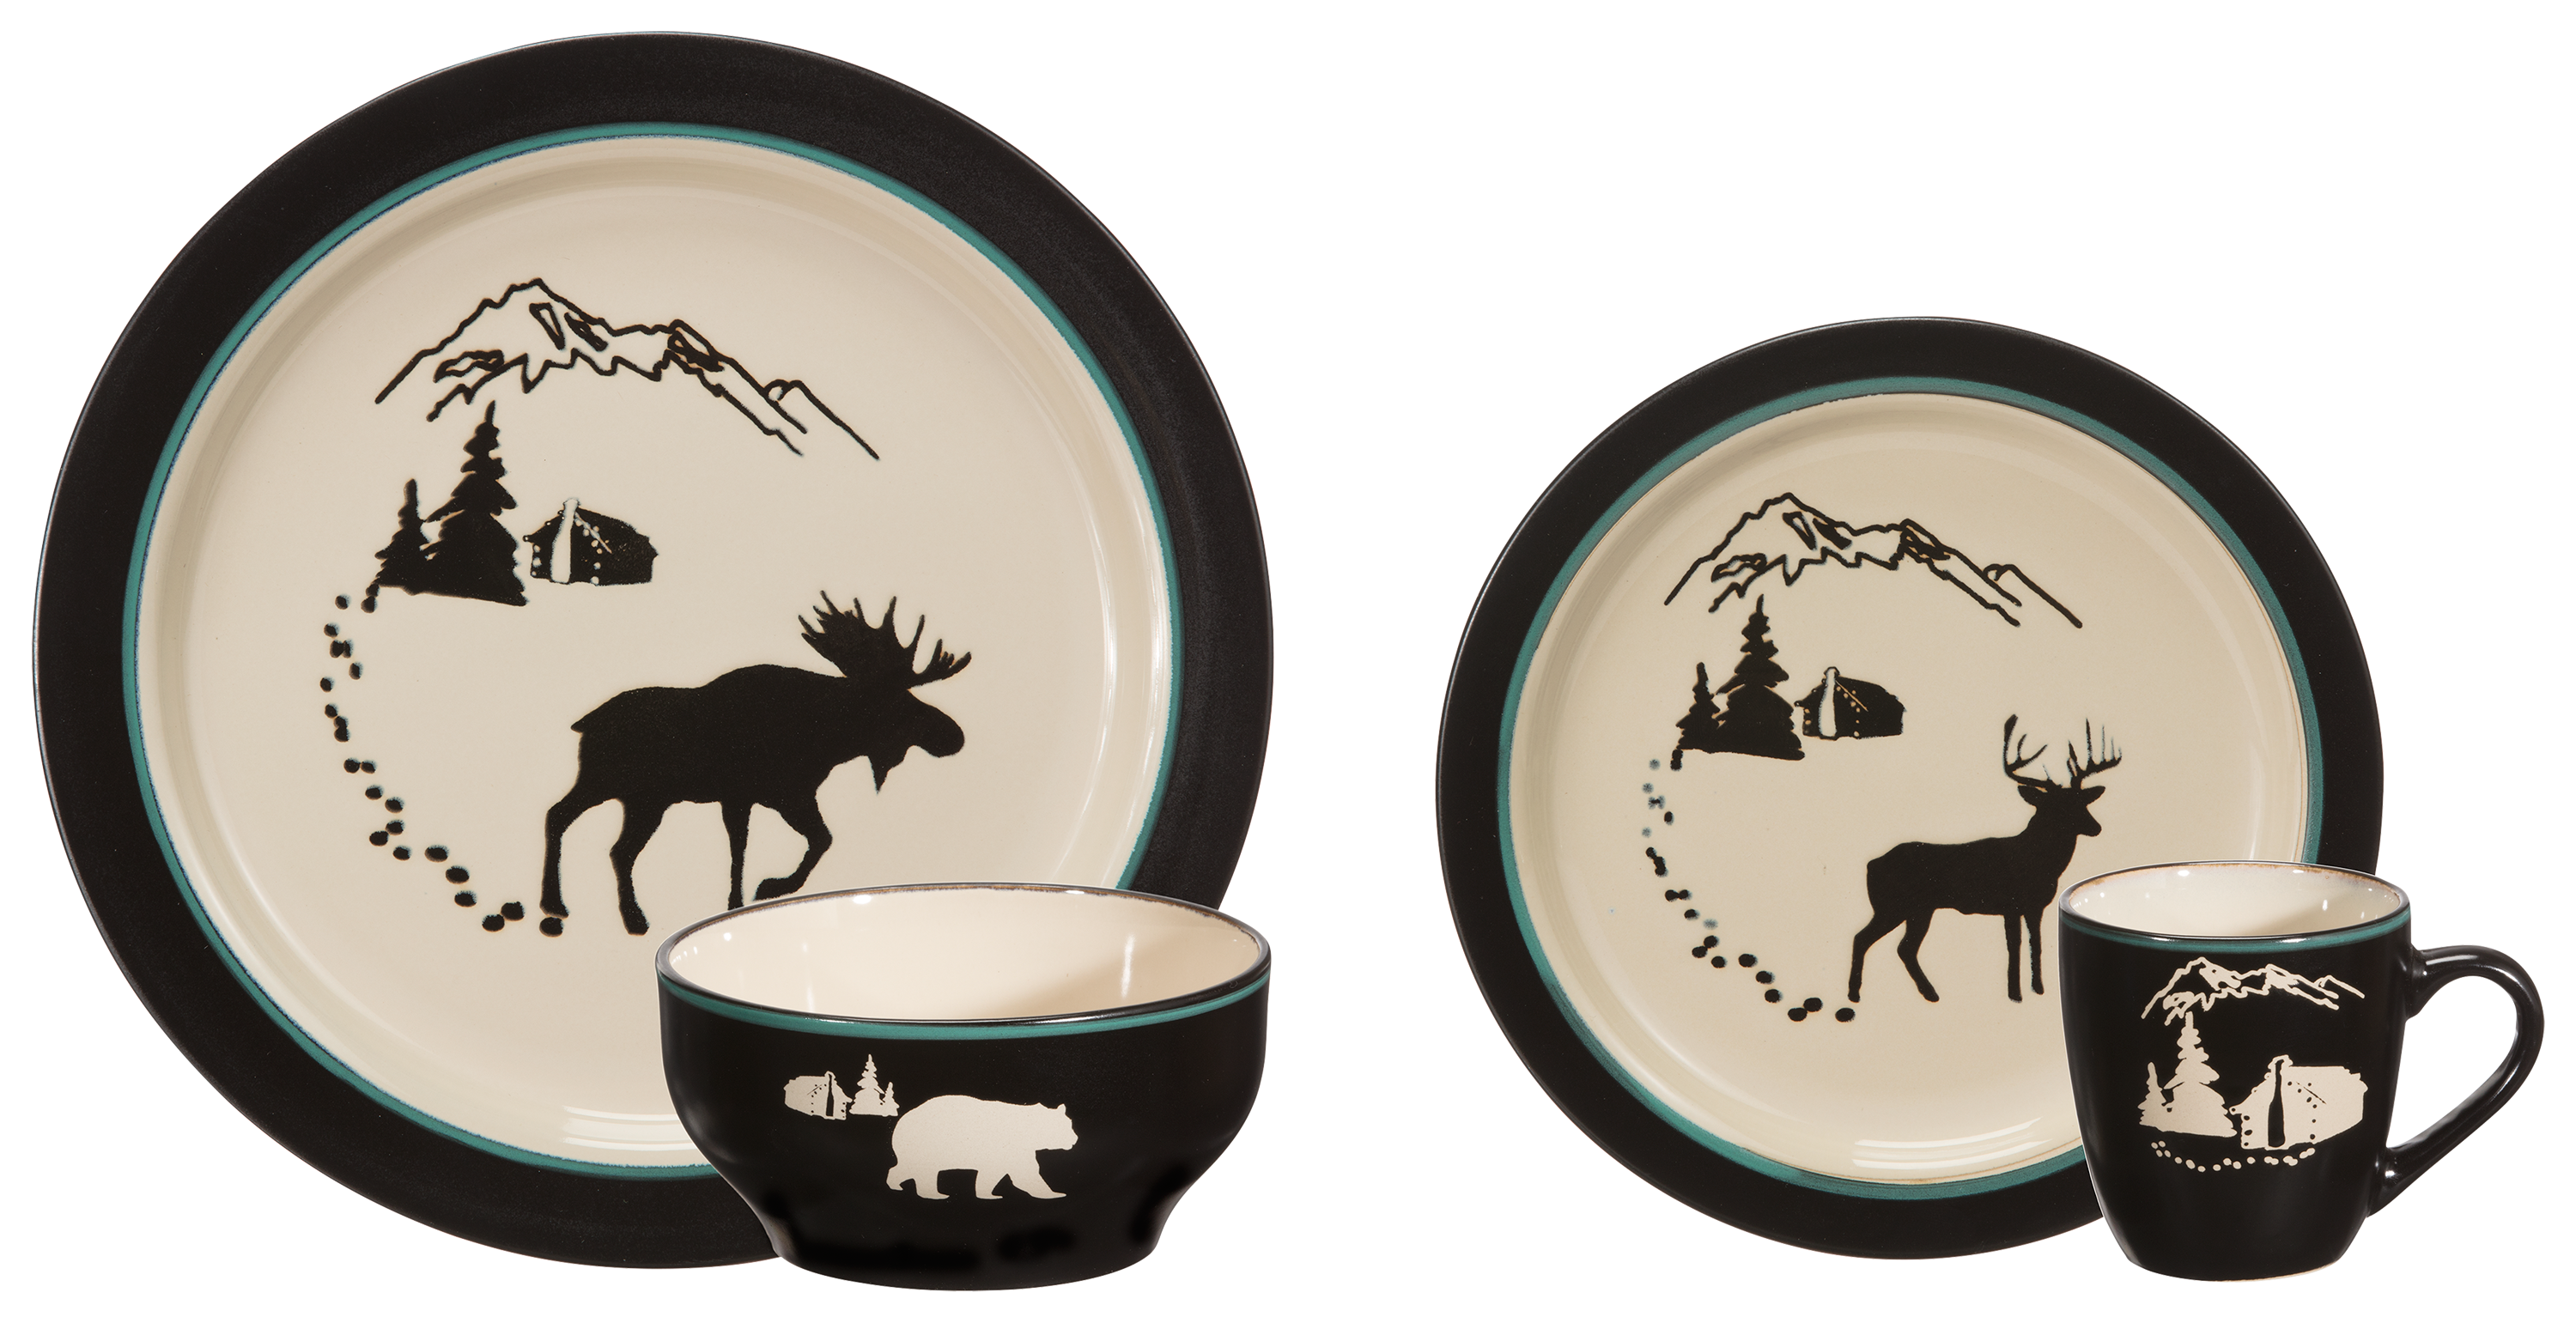 16 oz. On The Go double wall White travel mug [6600120] : Splendids  Dinnerware, Wholesale Dinnerware and Glassware for Restaurant and Home